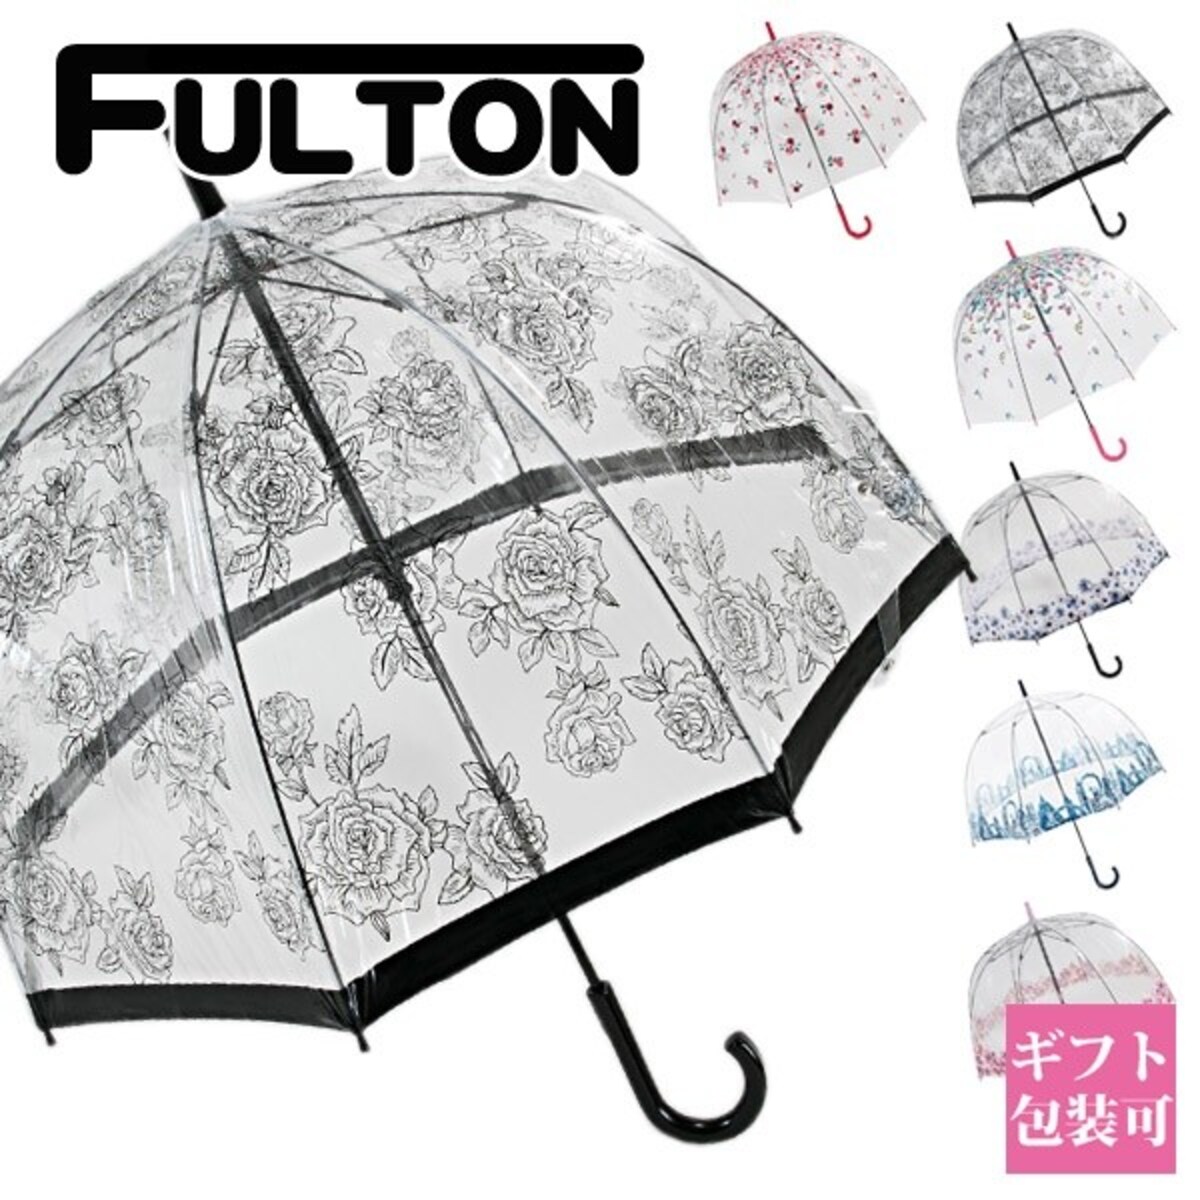 BirdCage2 Fulton Umbrella